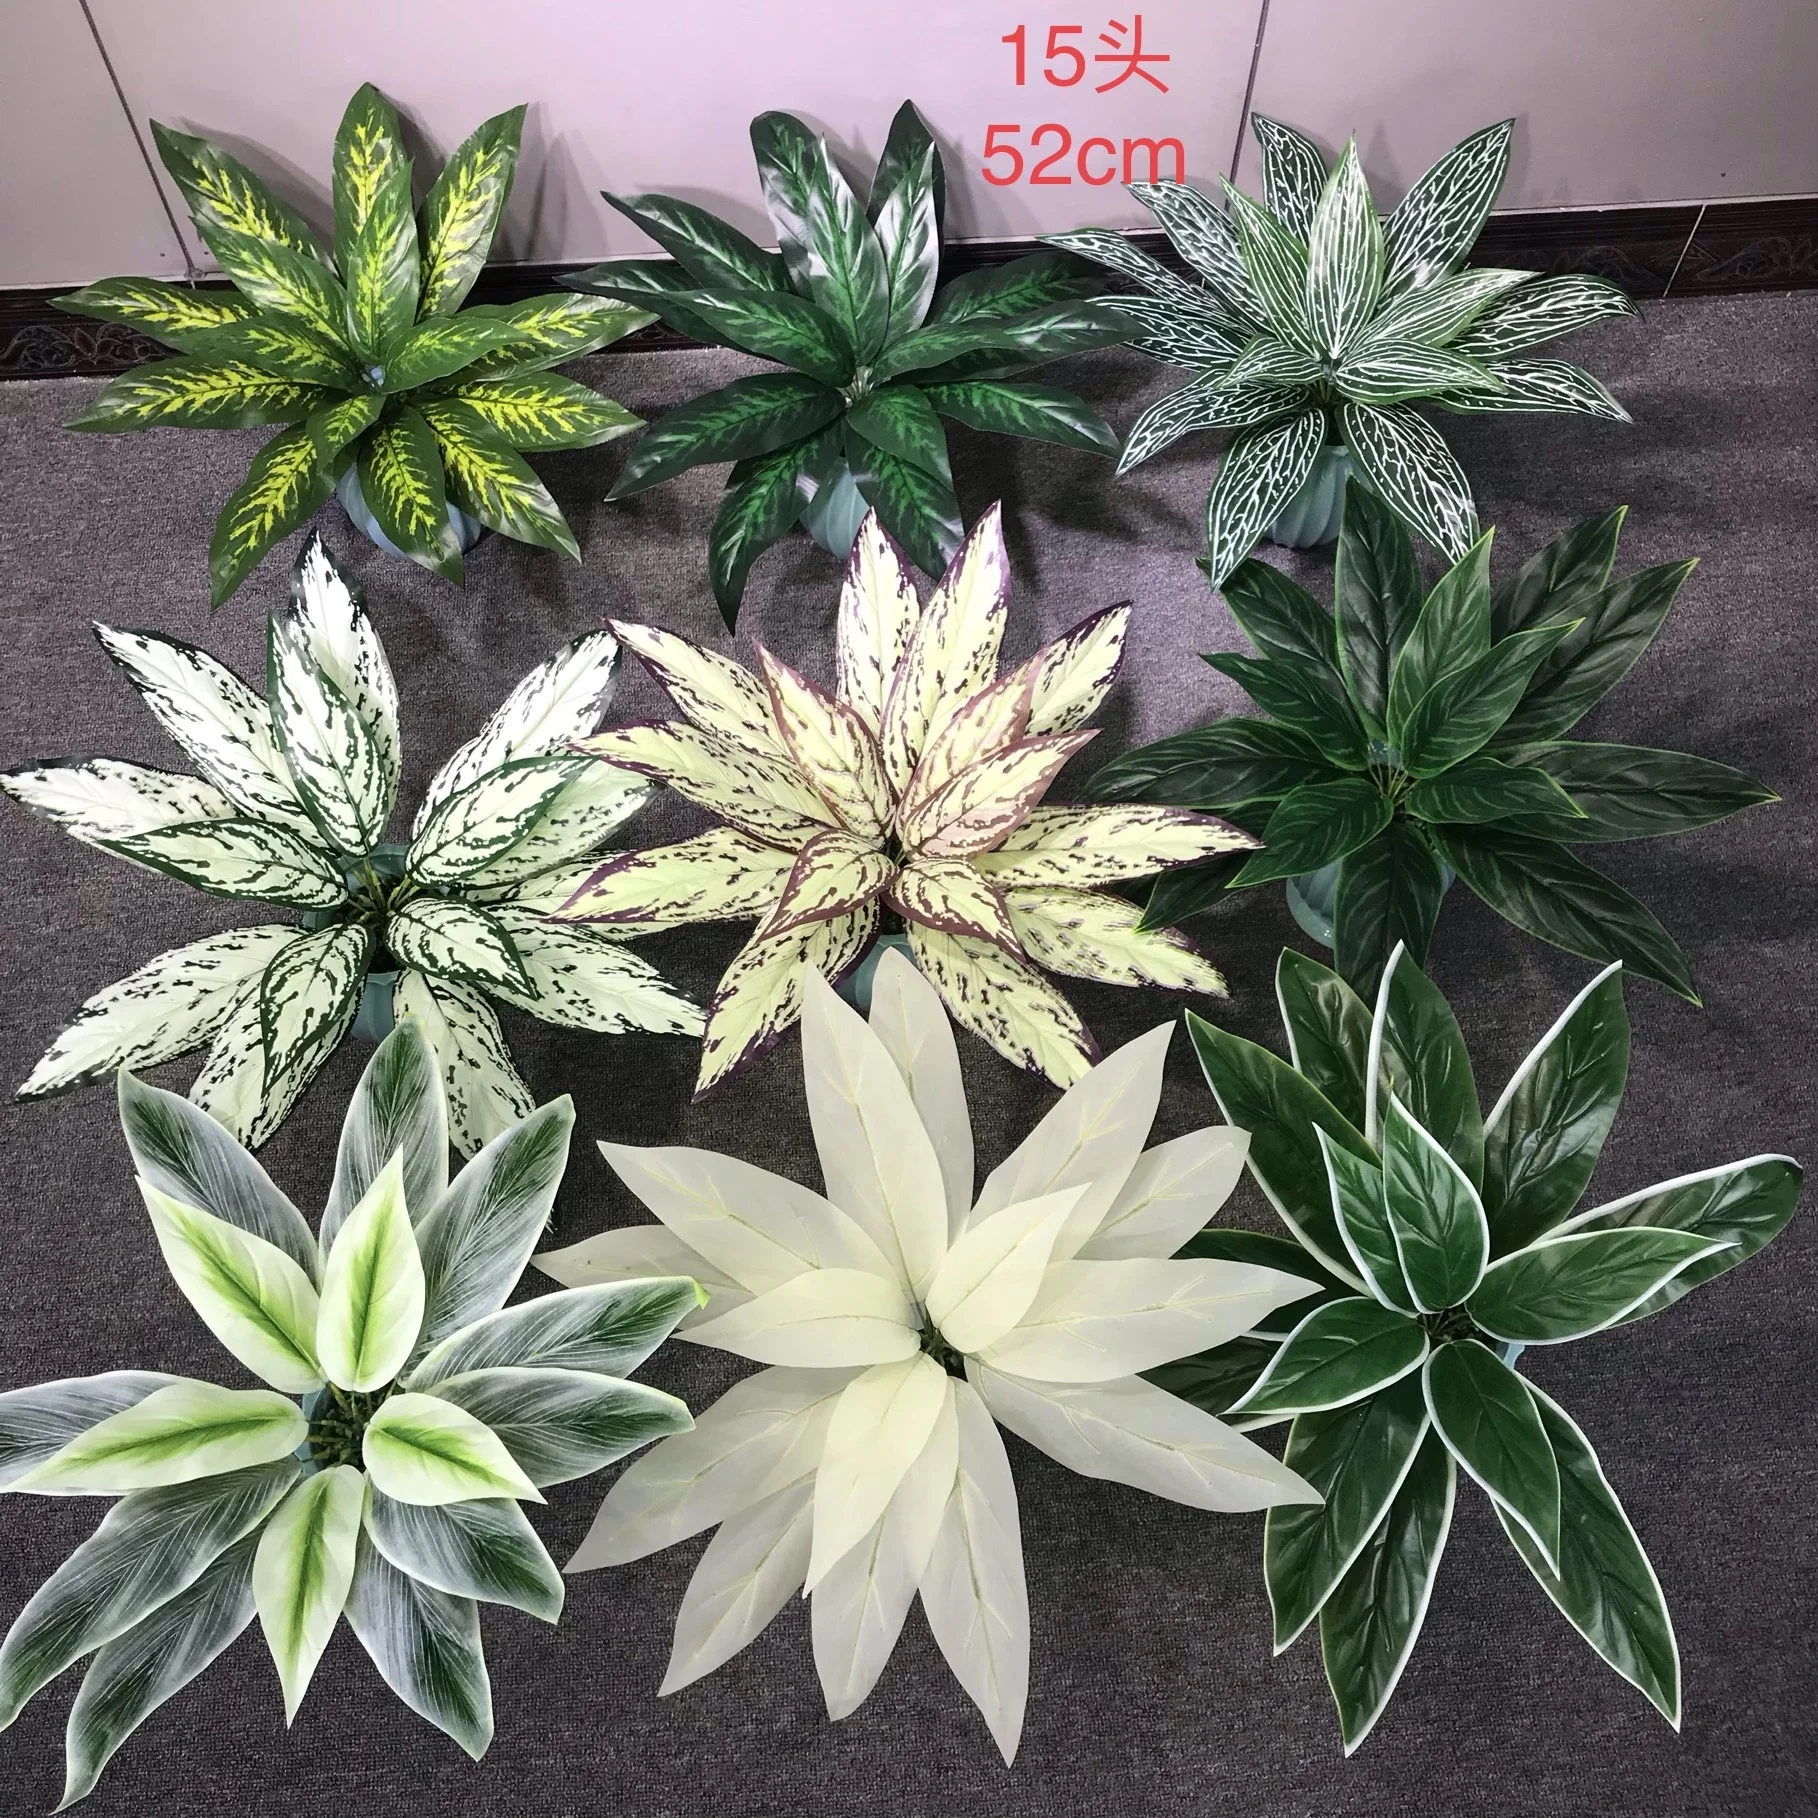 

Wholesale plants indoor leaf foliage 15lvs artificial greenery leaf bush for plant wall decoration